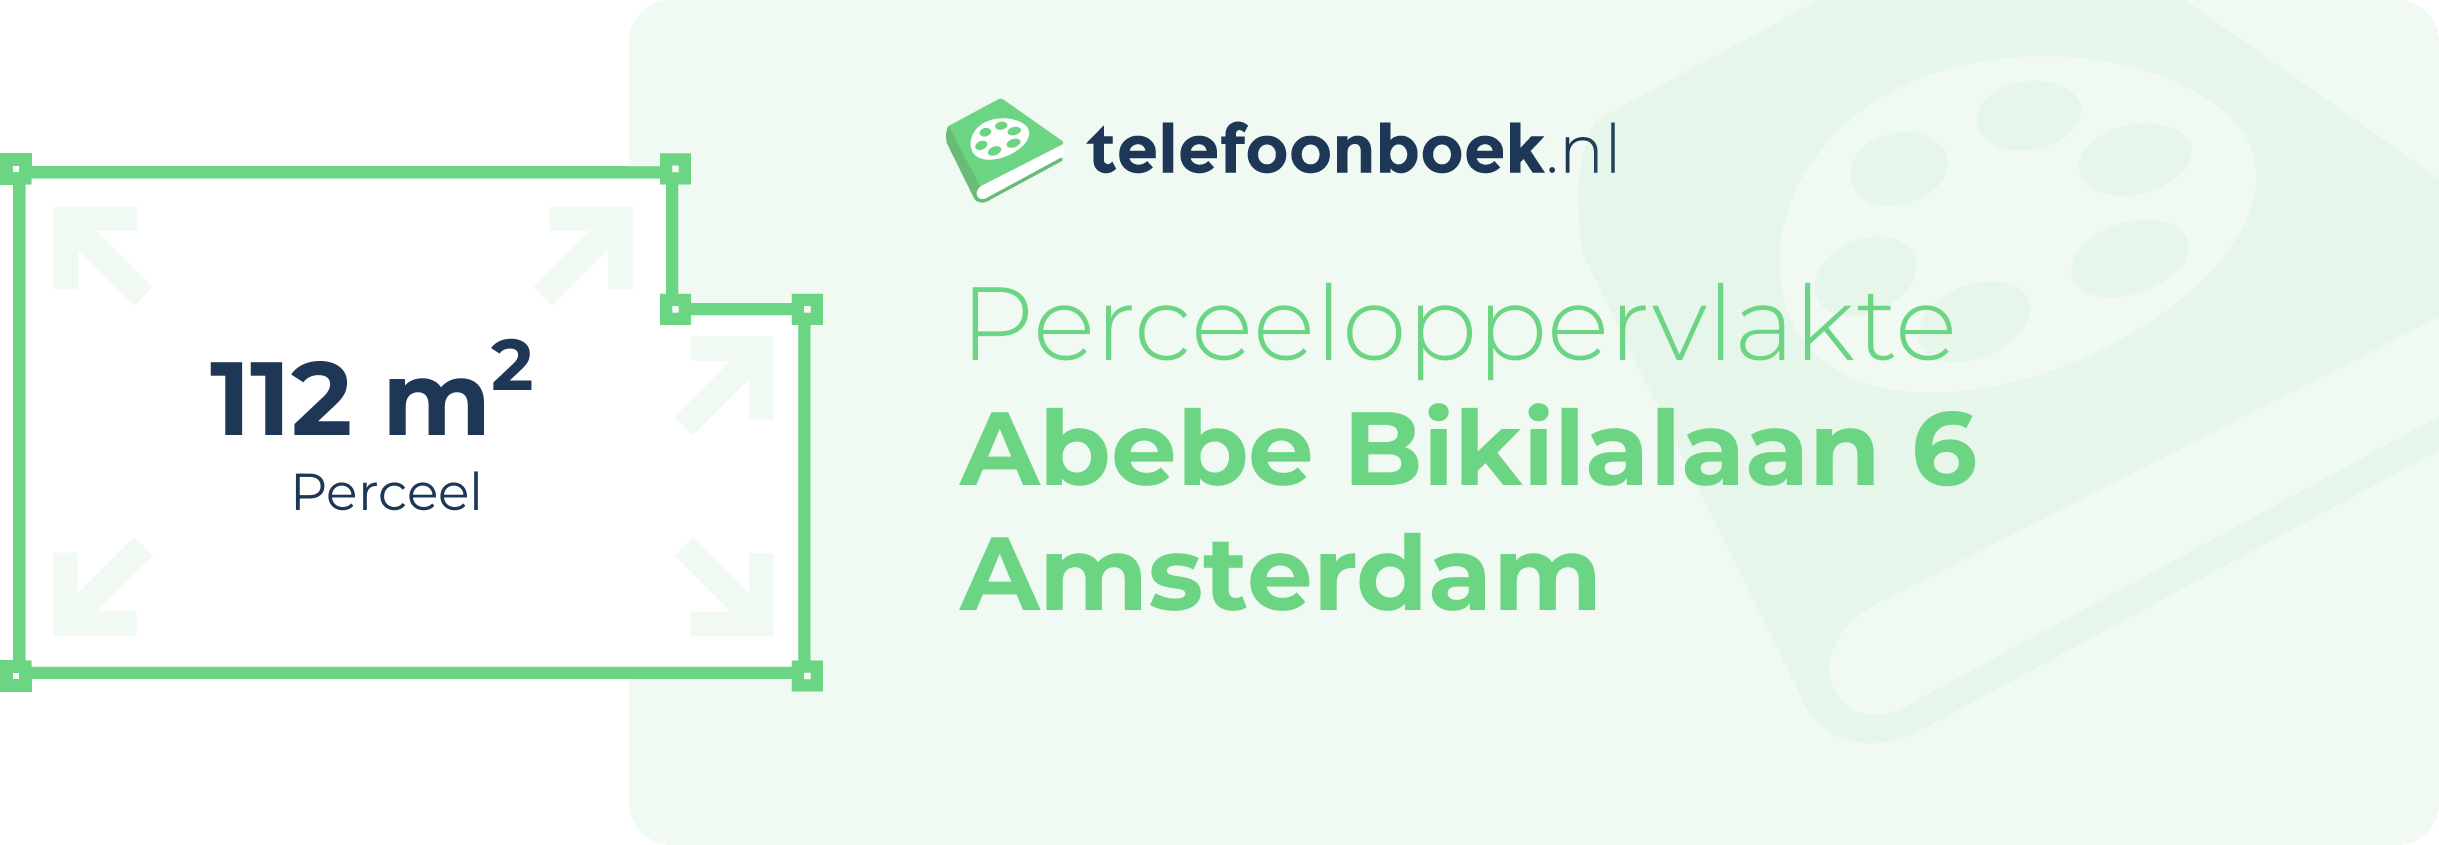 Perceeloppervlakte Abebe Bikilalaan 6 Amsterdam